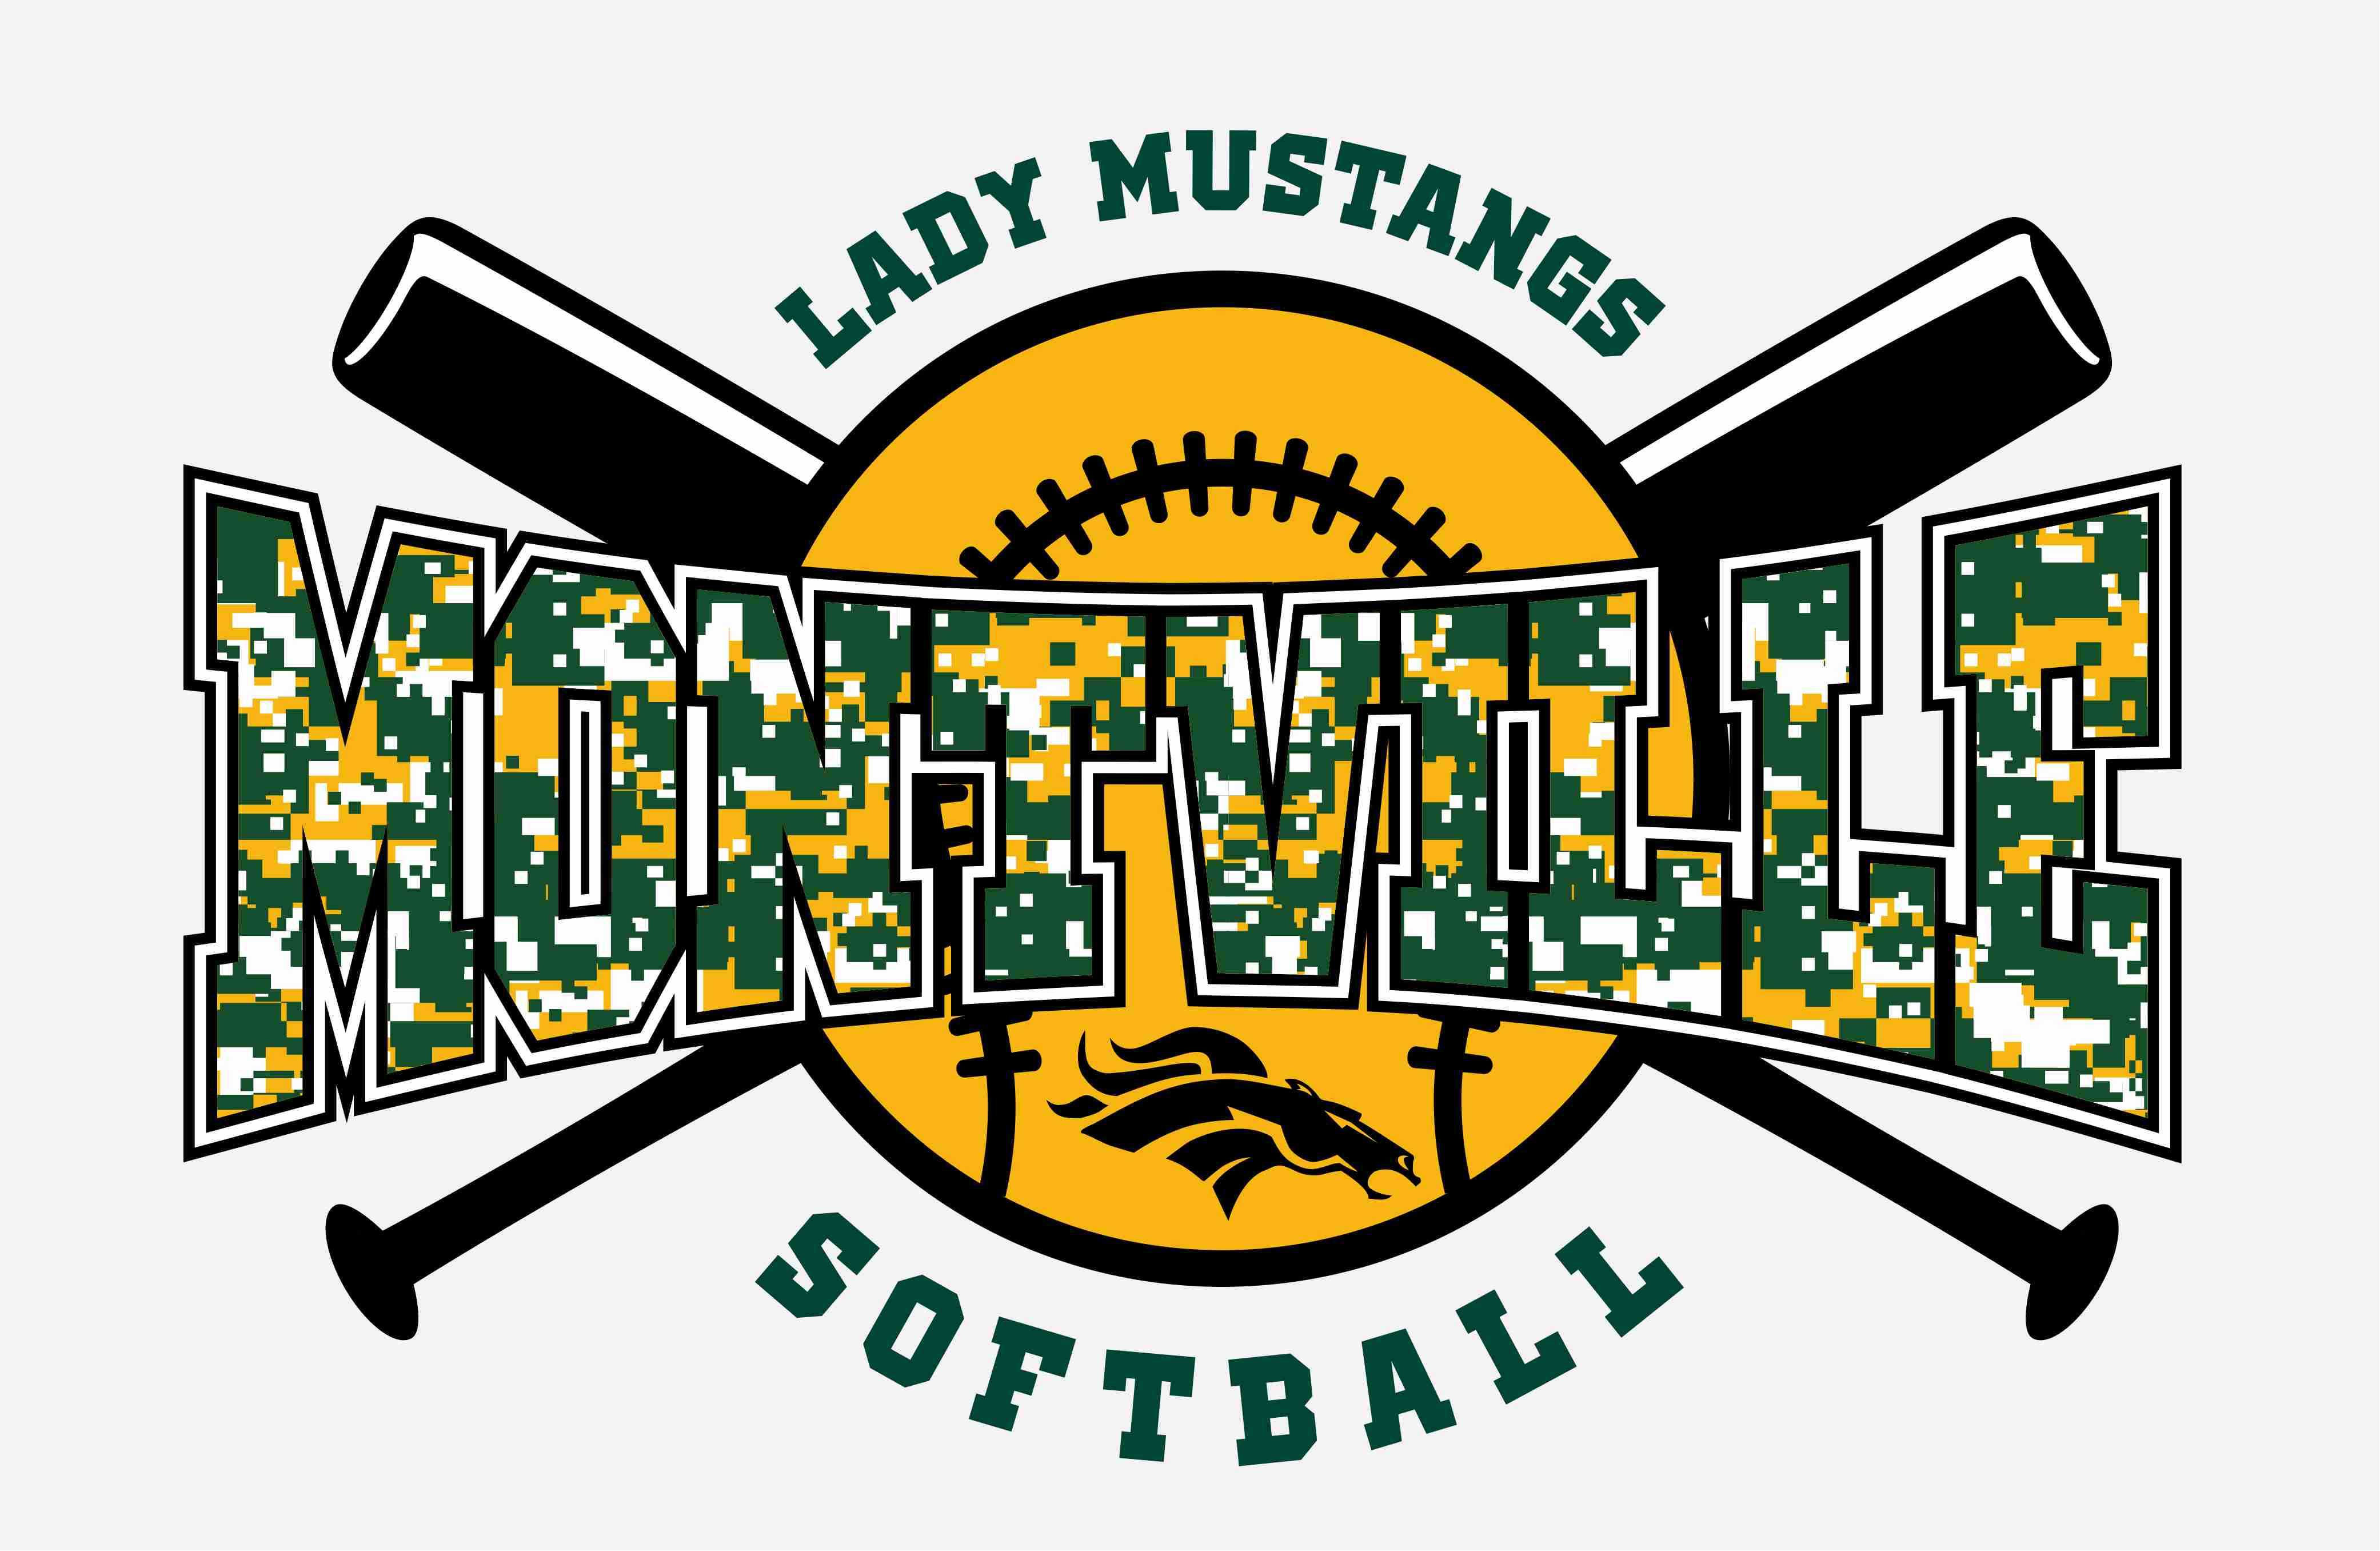 Montville Lady Mustangs Travel Softball